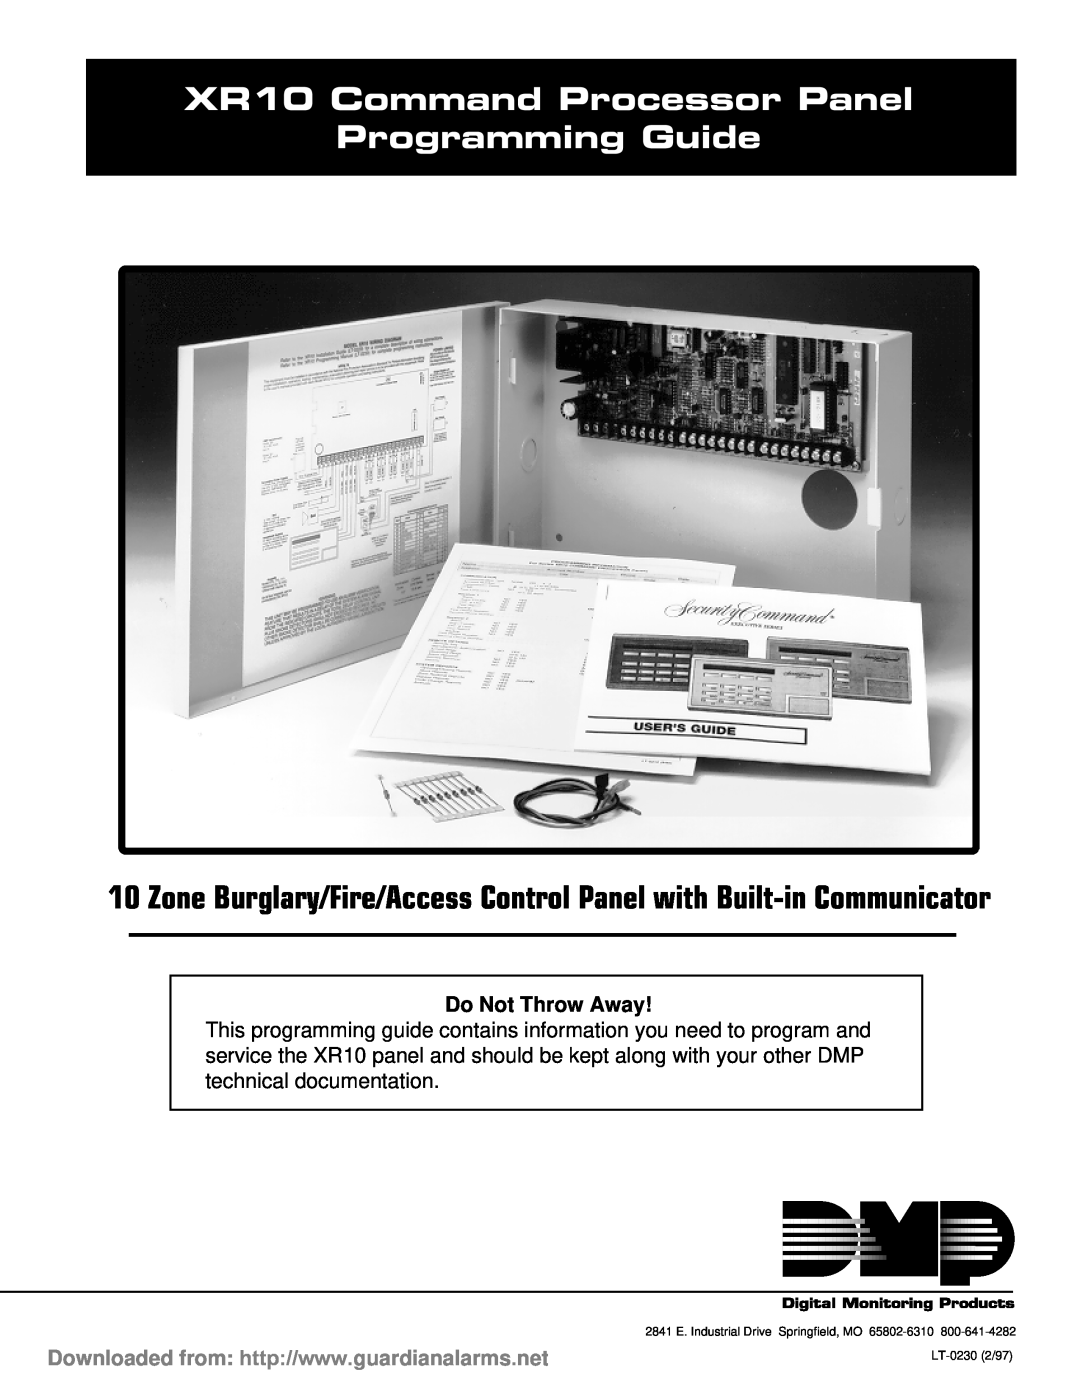 DMP Electronics manual User’s Guide, XR6/XR10 